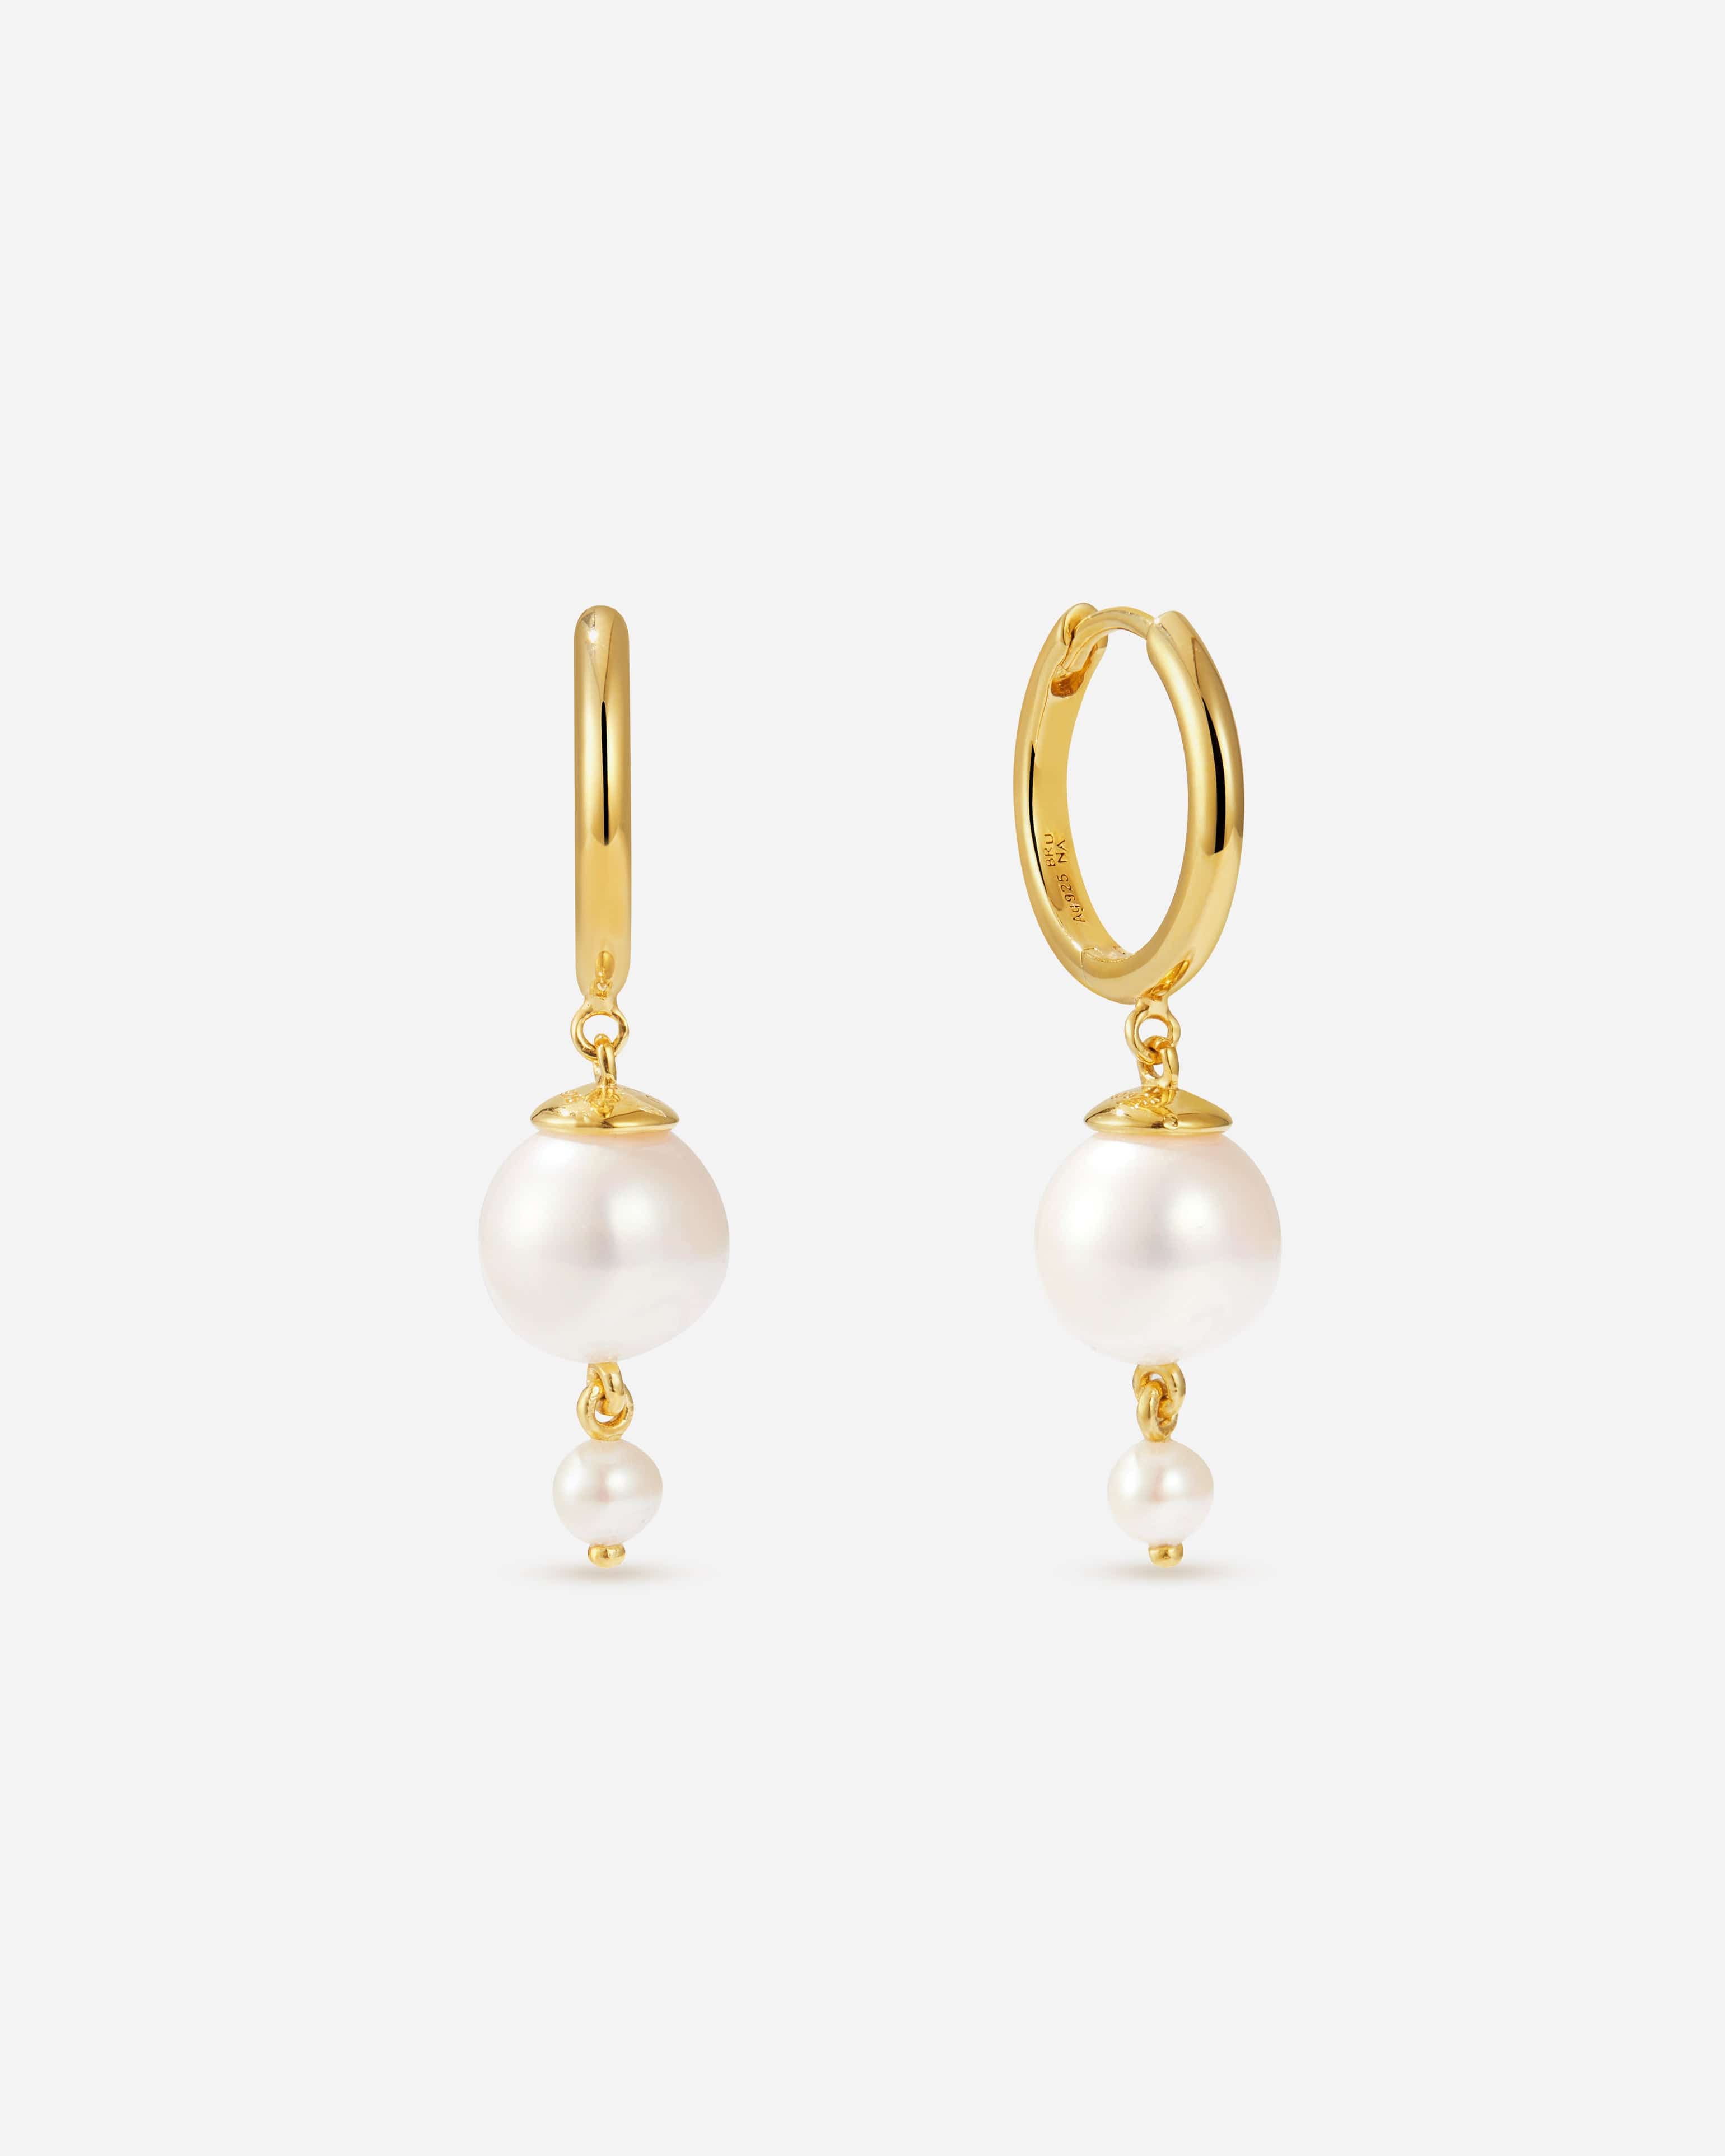 White Baroque Pearl Drop Earrings with Flower Top, Vermeil